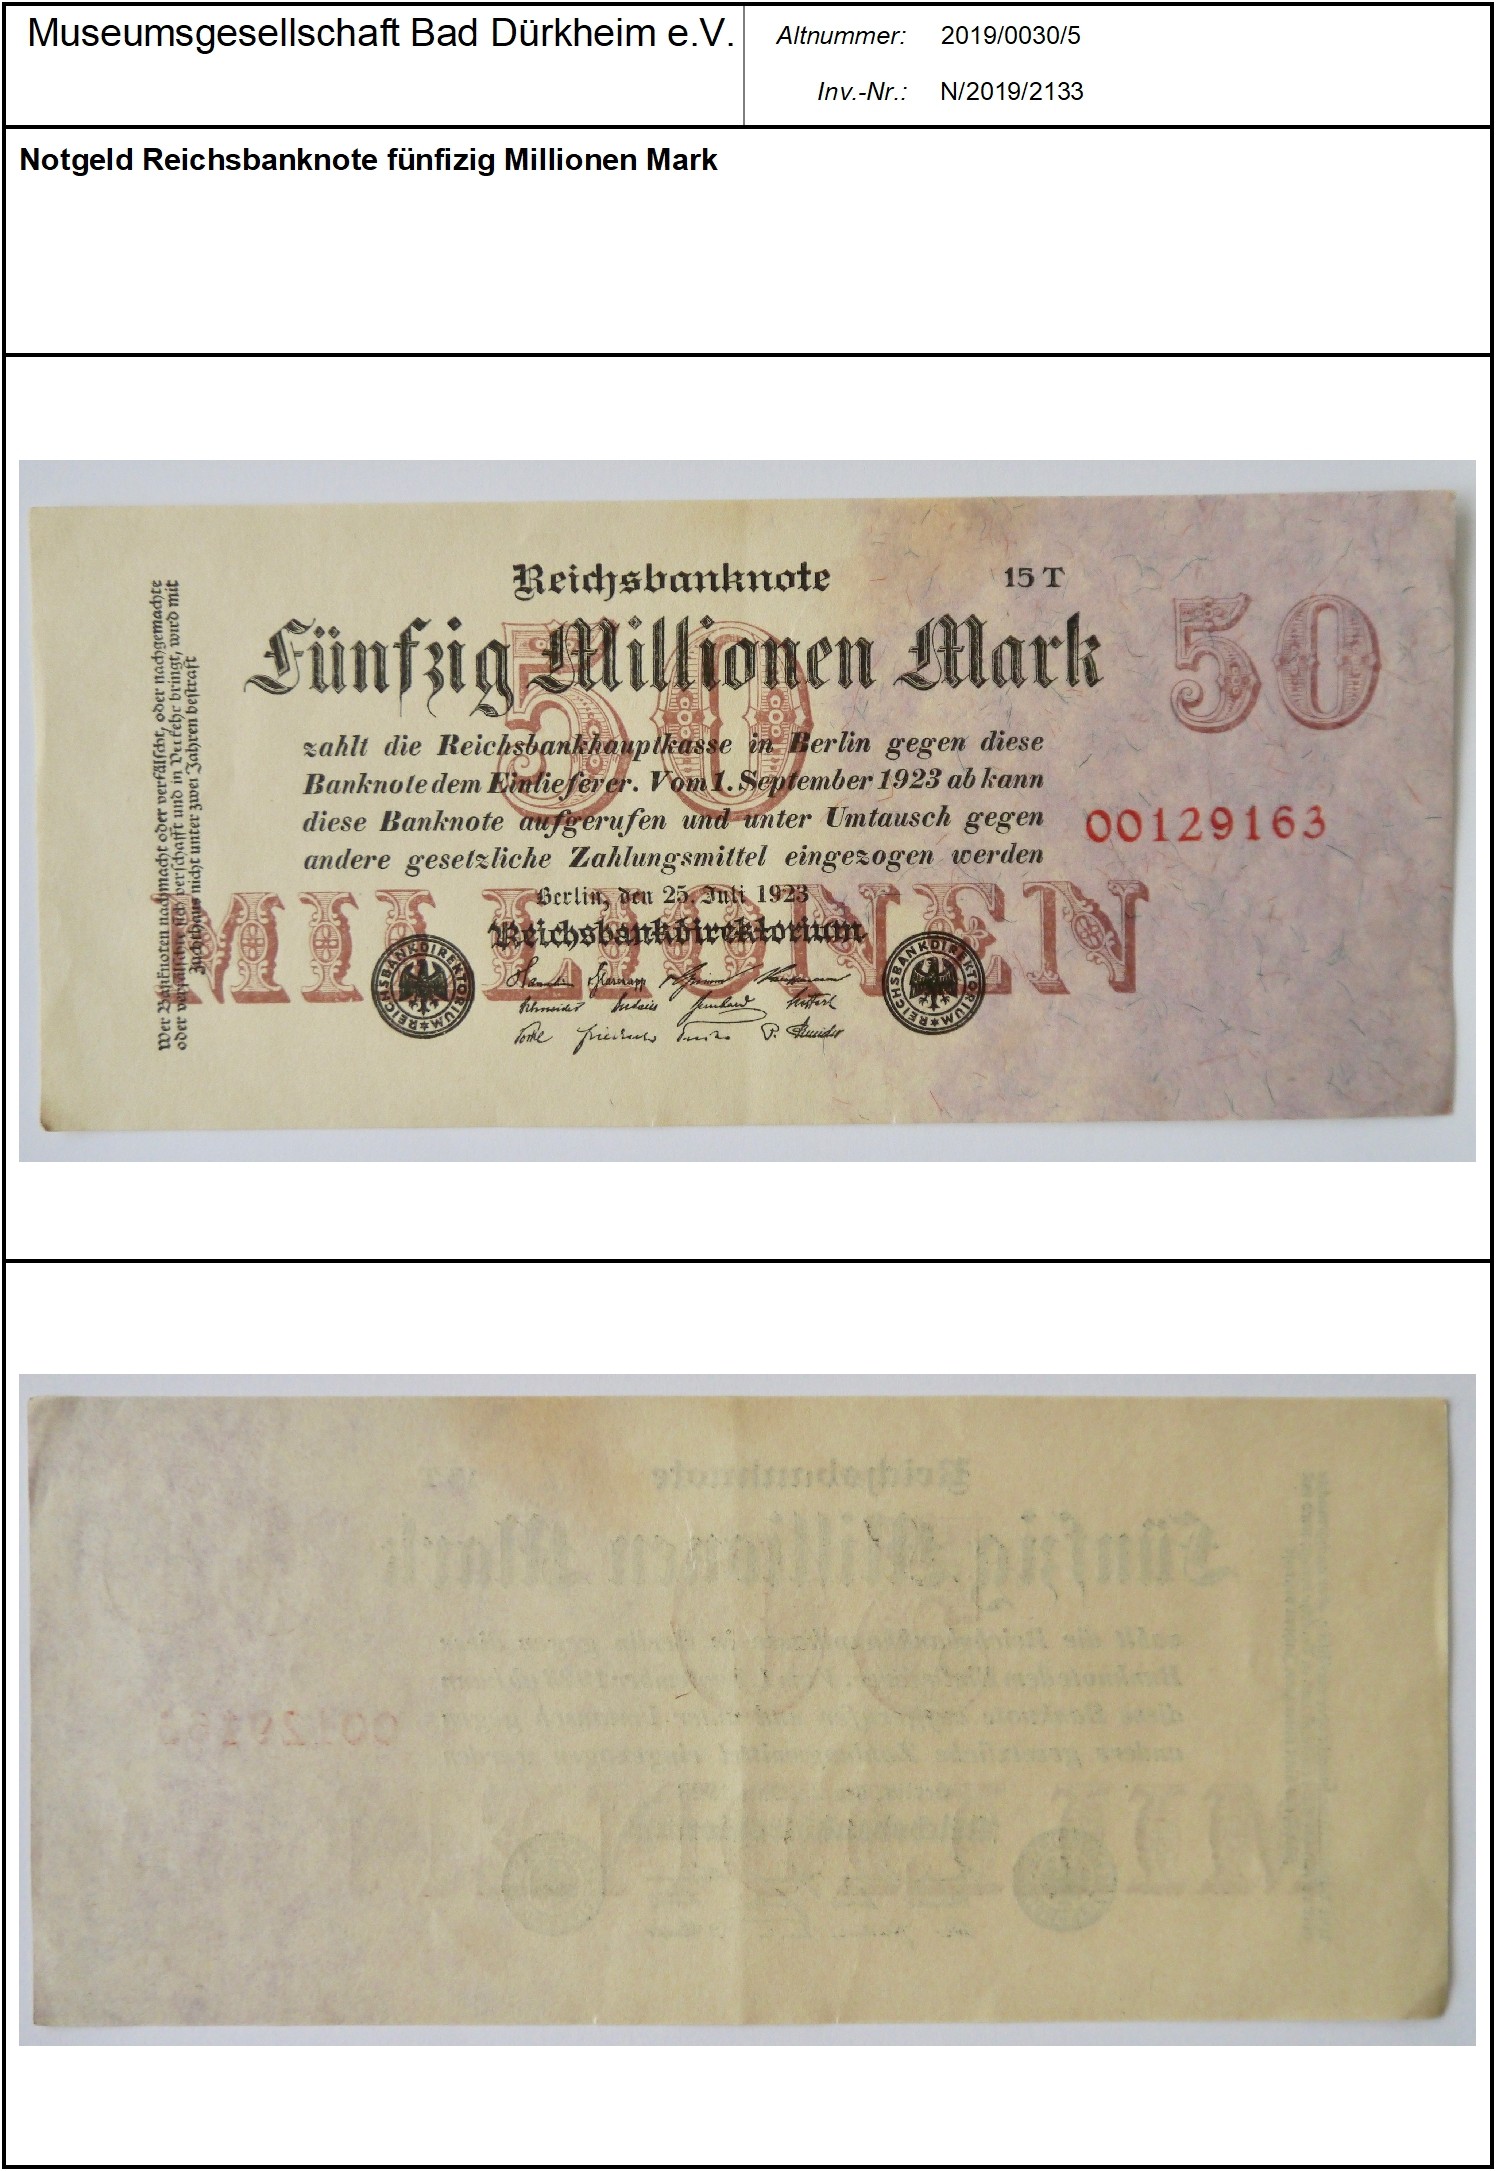 Notgeld Reichsbanknote fünfizig Millionen Mark
Serien-Nummer: 00129163 (Museumsgesellschaft Bad Dürkheim e.V. CC BY-NC-SA)